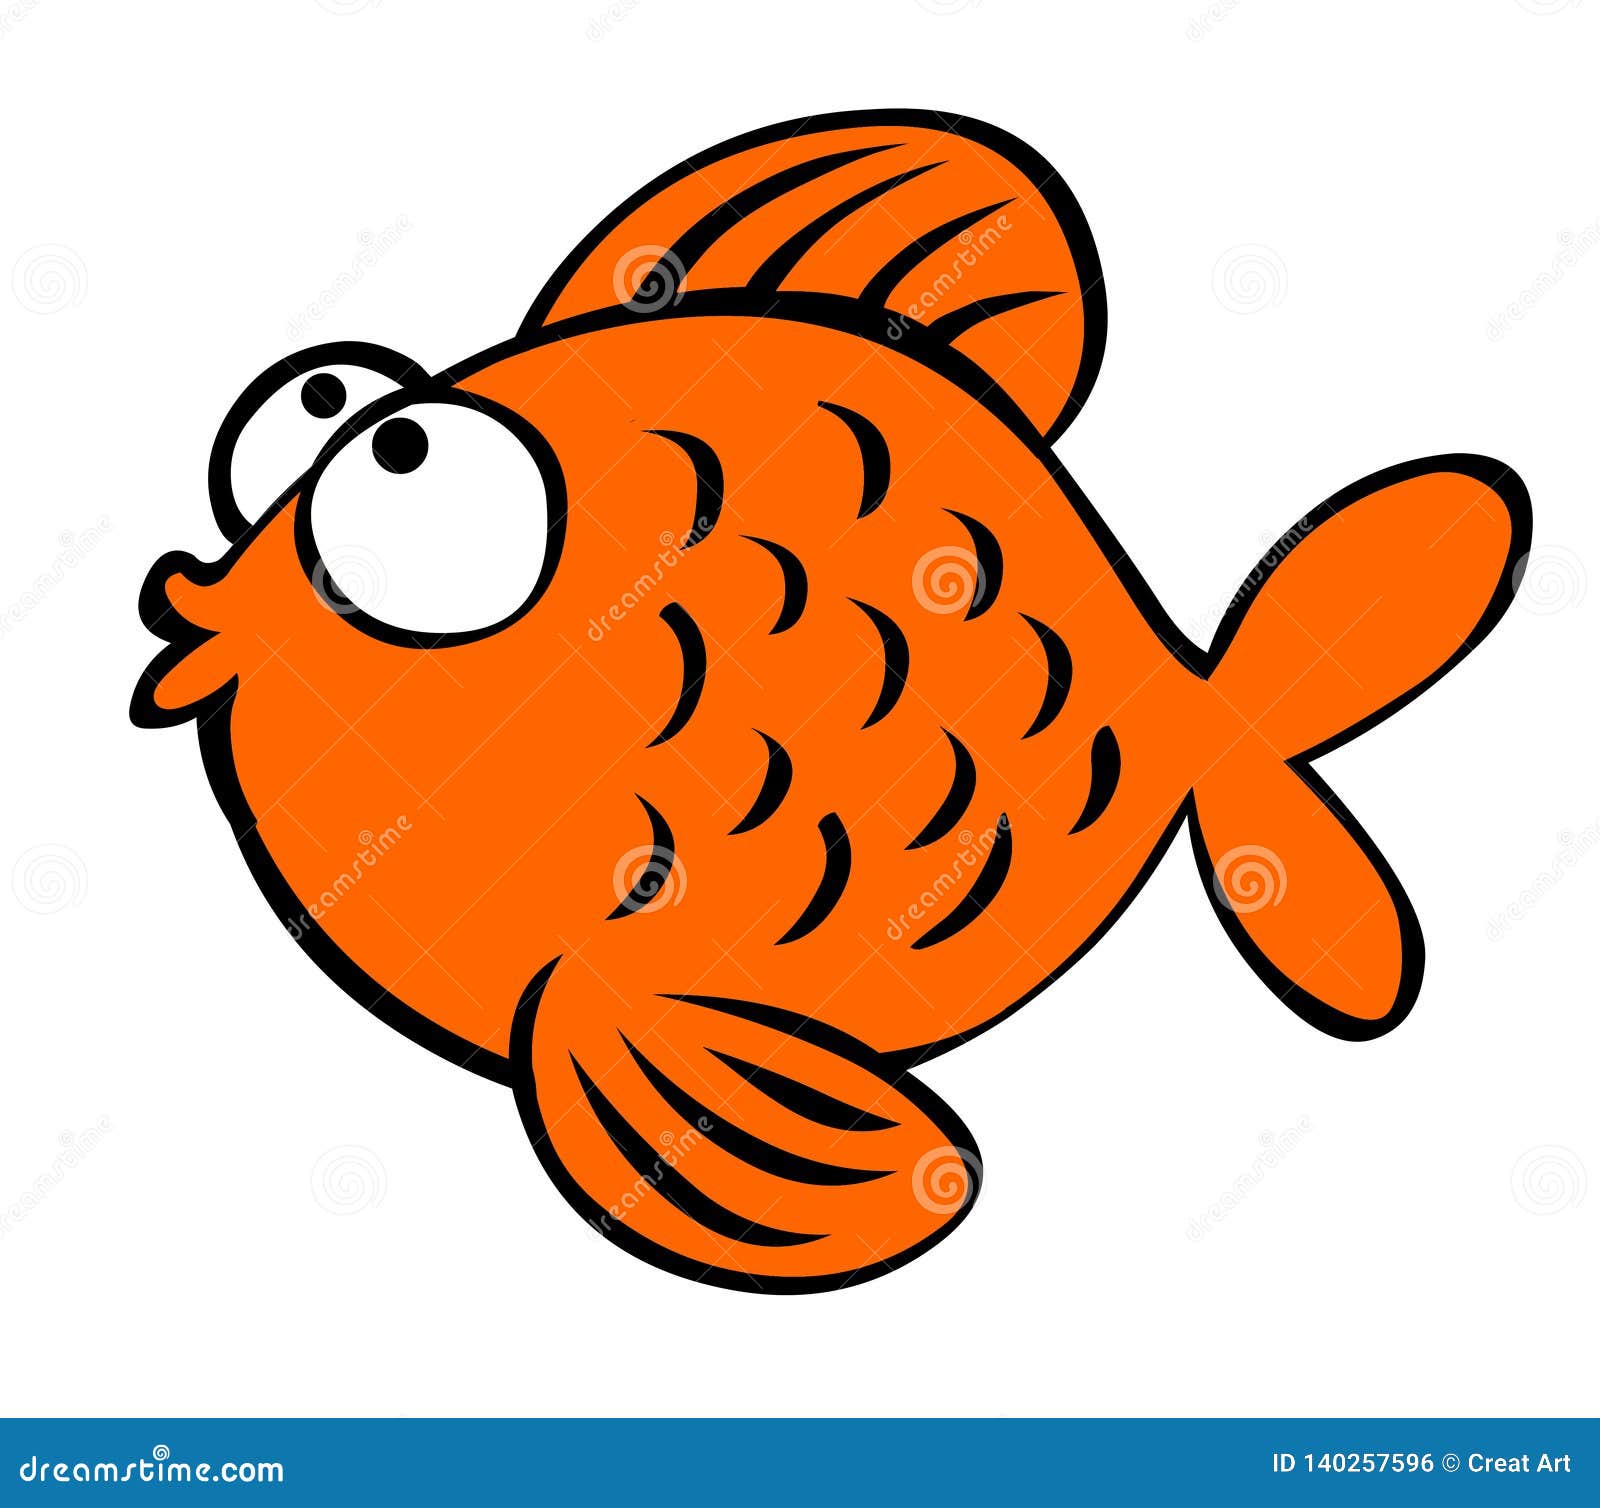 Download Cartoon Fish Vector.Fish Illustration.Fish Icon Logo Stock Vector - Illustration of logo ...